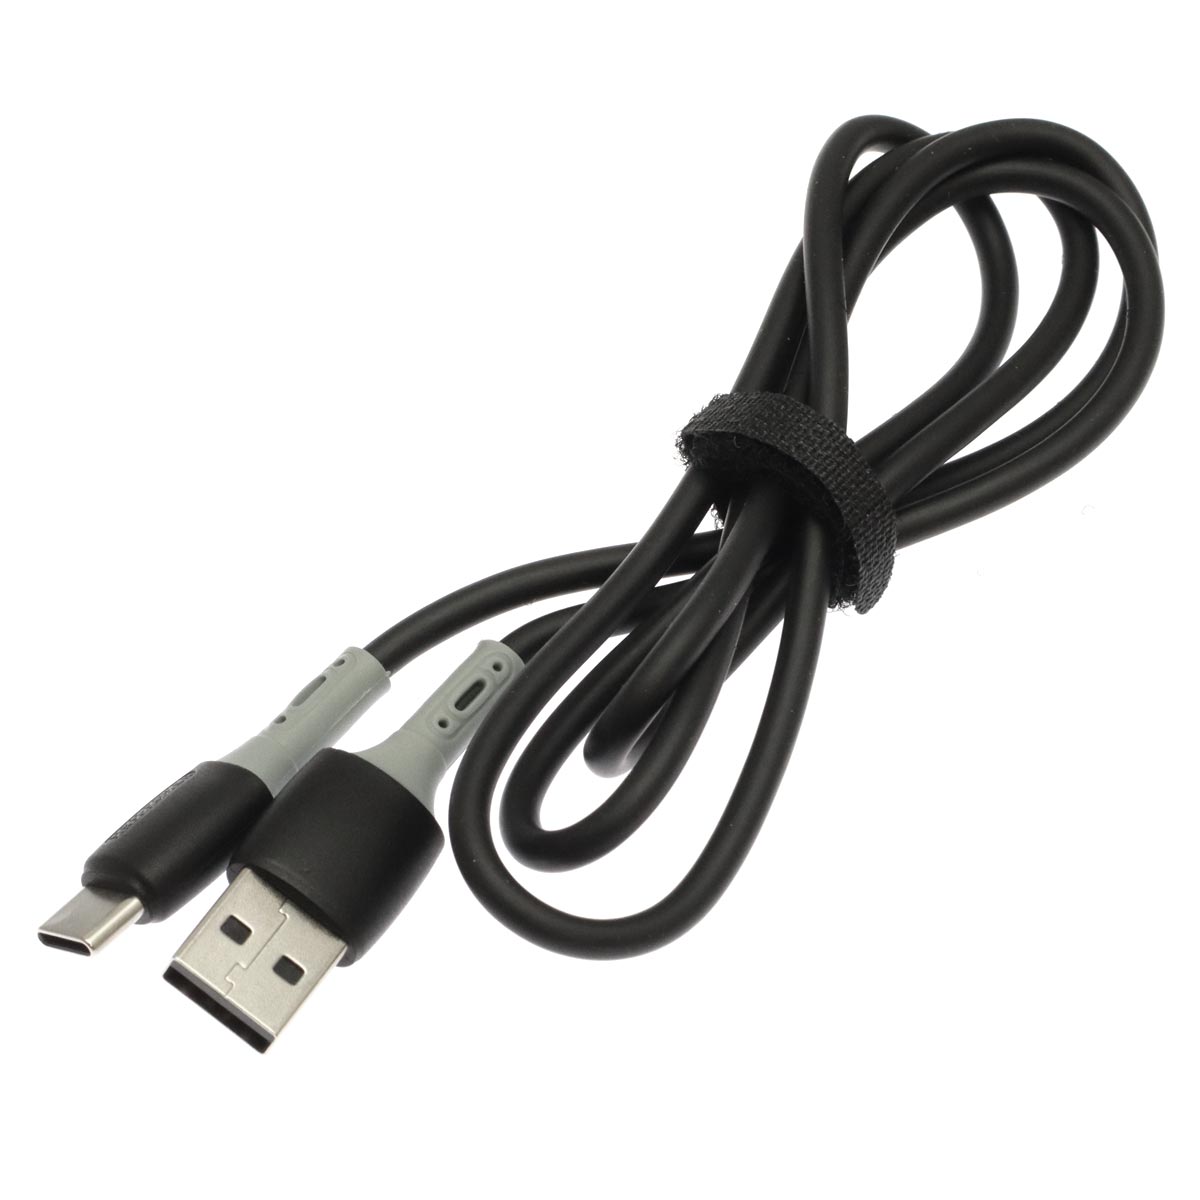 Кабель MRM G6 USB Type C, длина 1 метр, цвет черно серый